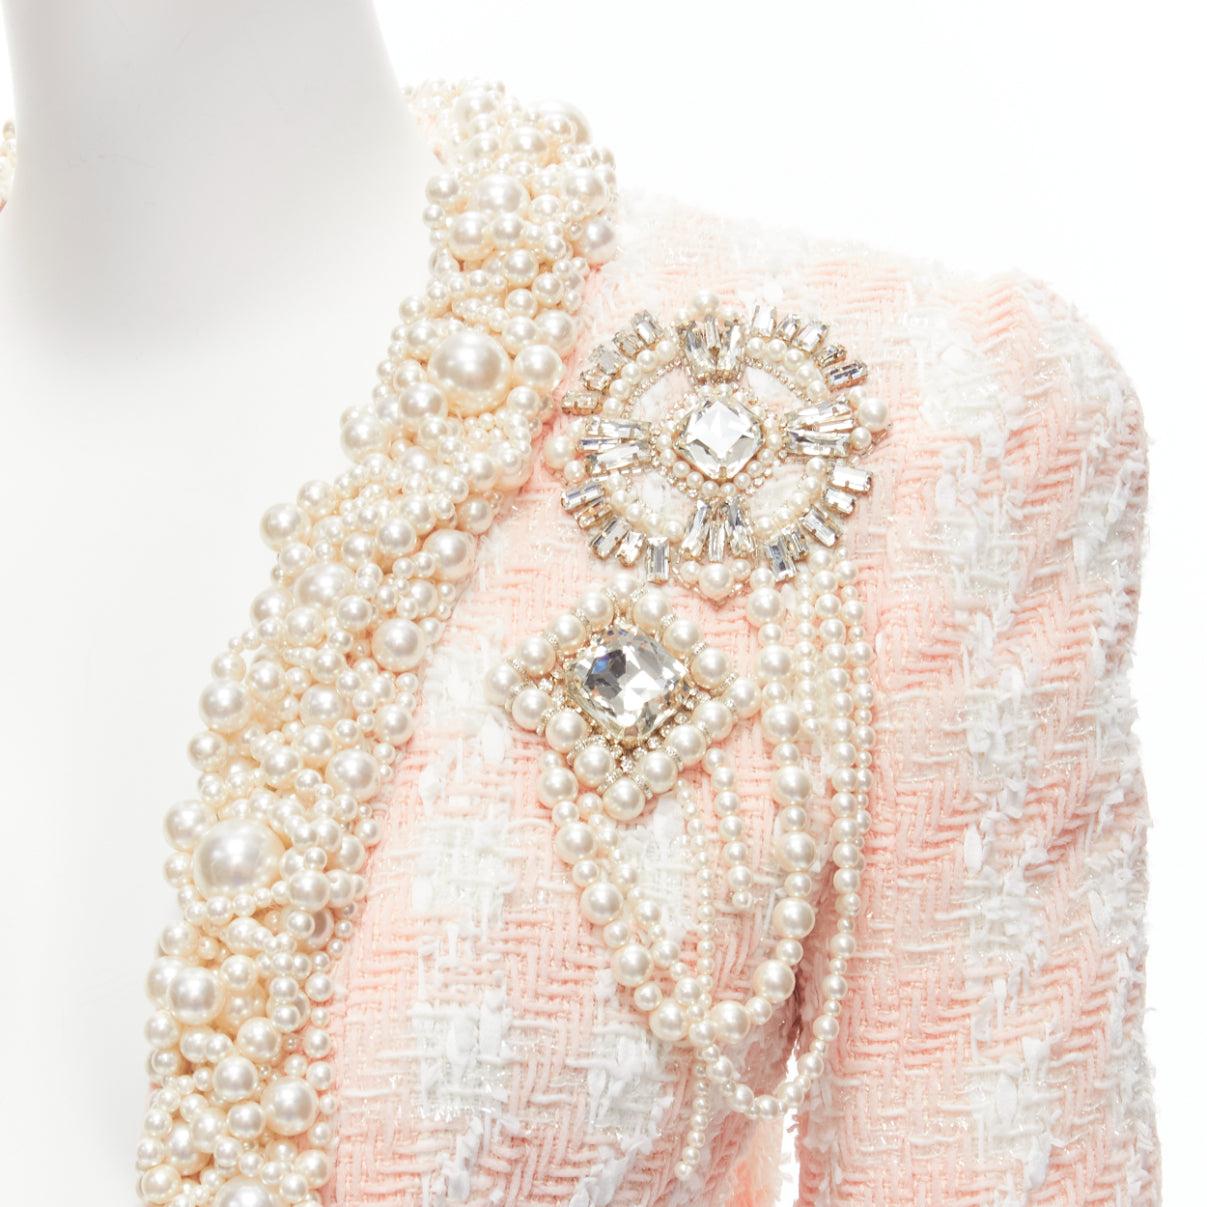 BALMAIN Spencer pink white metallic tweed pearl embellished blazer jacket FR34 XS
Reference: AAWC/A00518
Brand: Balmain
Designer: Olivier Rousteing
Model: Spencer
Material: Tweed, Faux Pearl
Color: White, Pink
Pattern: Tweed
Lining: White